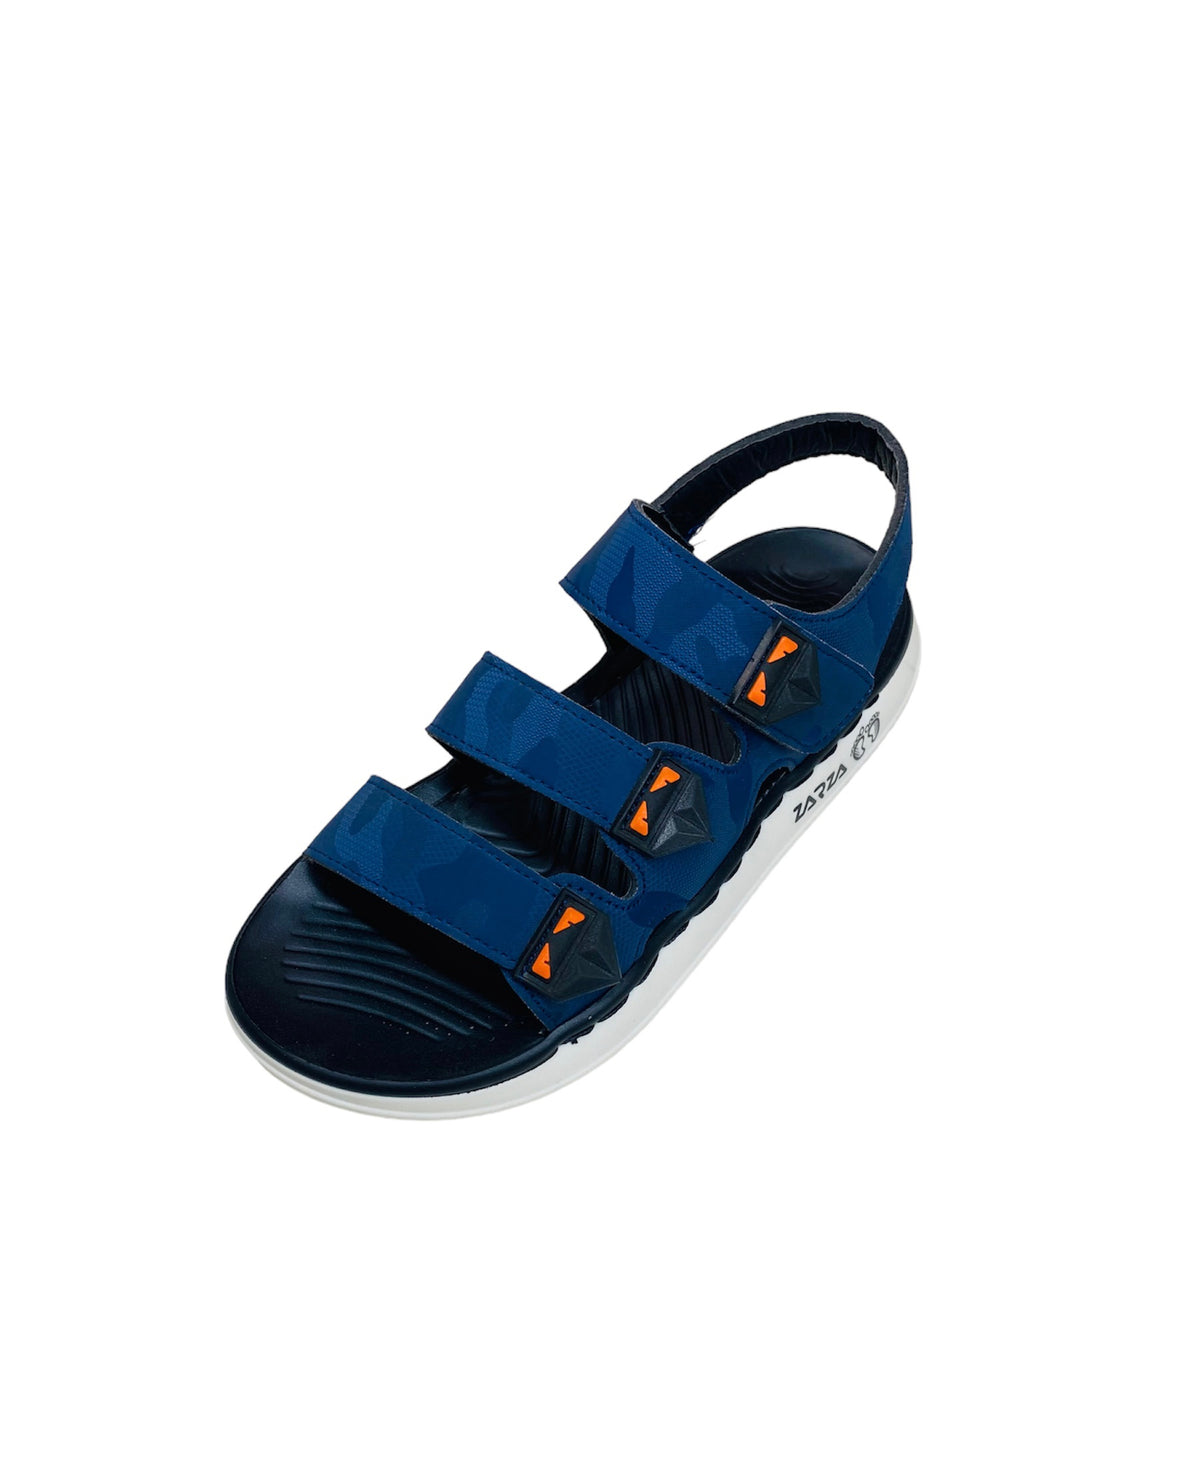 Blue Strap Sandal